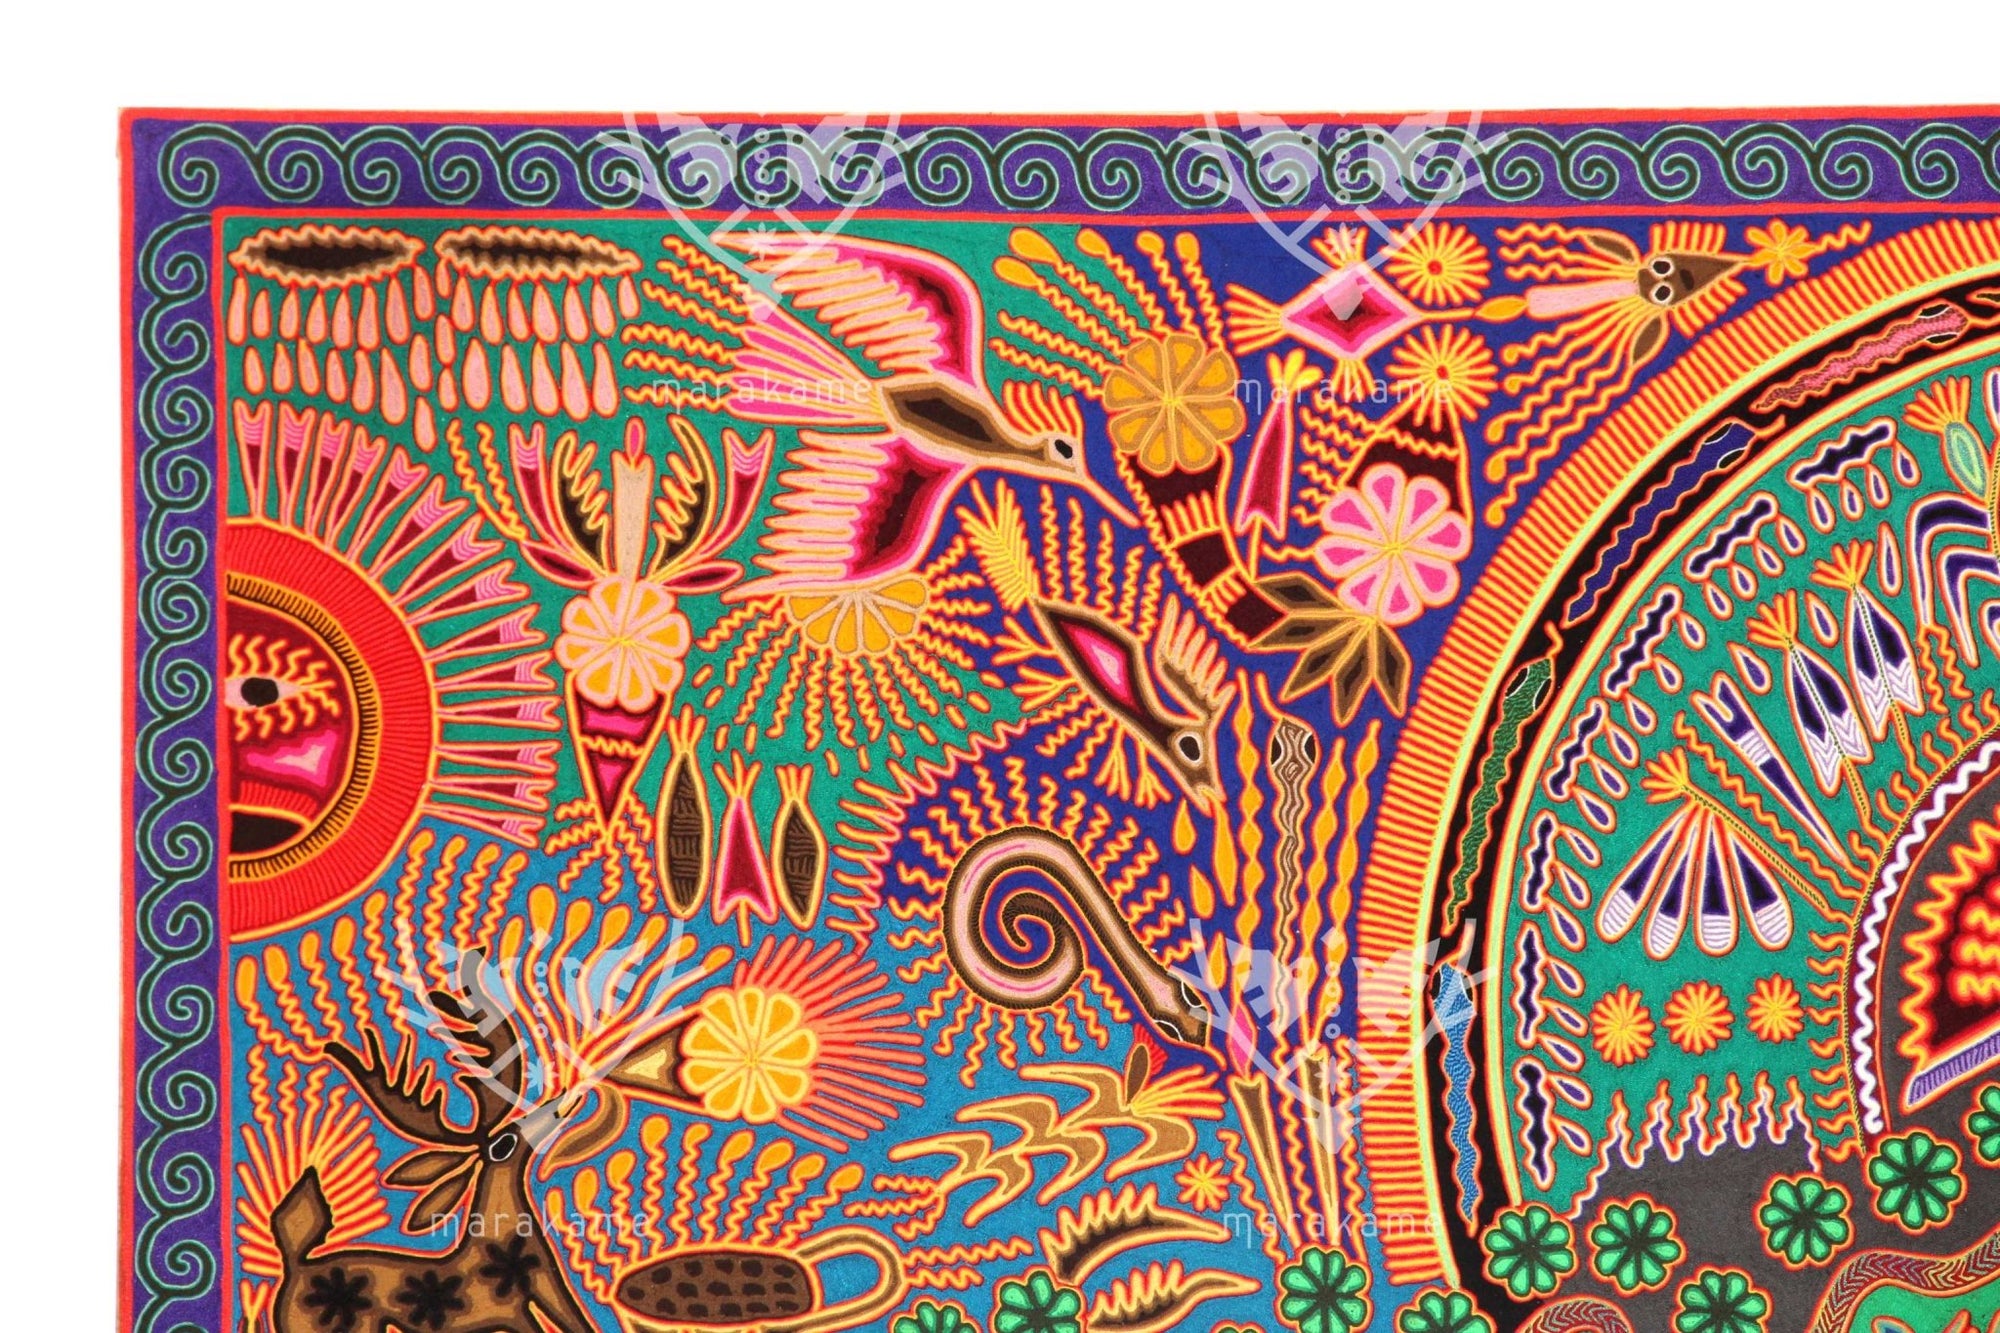 Nierika de Estambre Cuadro Huichol - Marakame - 244 x 122 cm. - Arte Huichol - Marakame